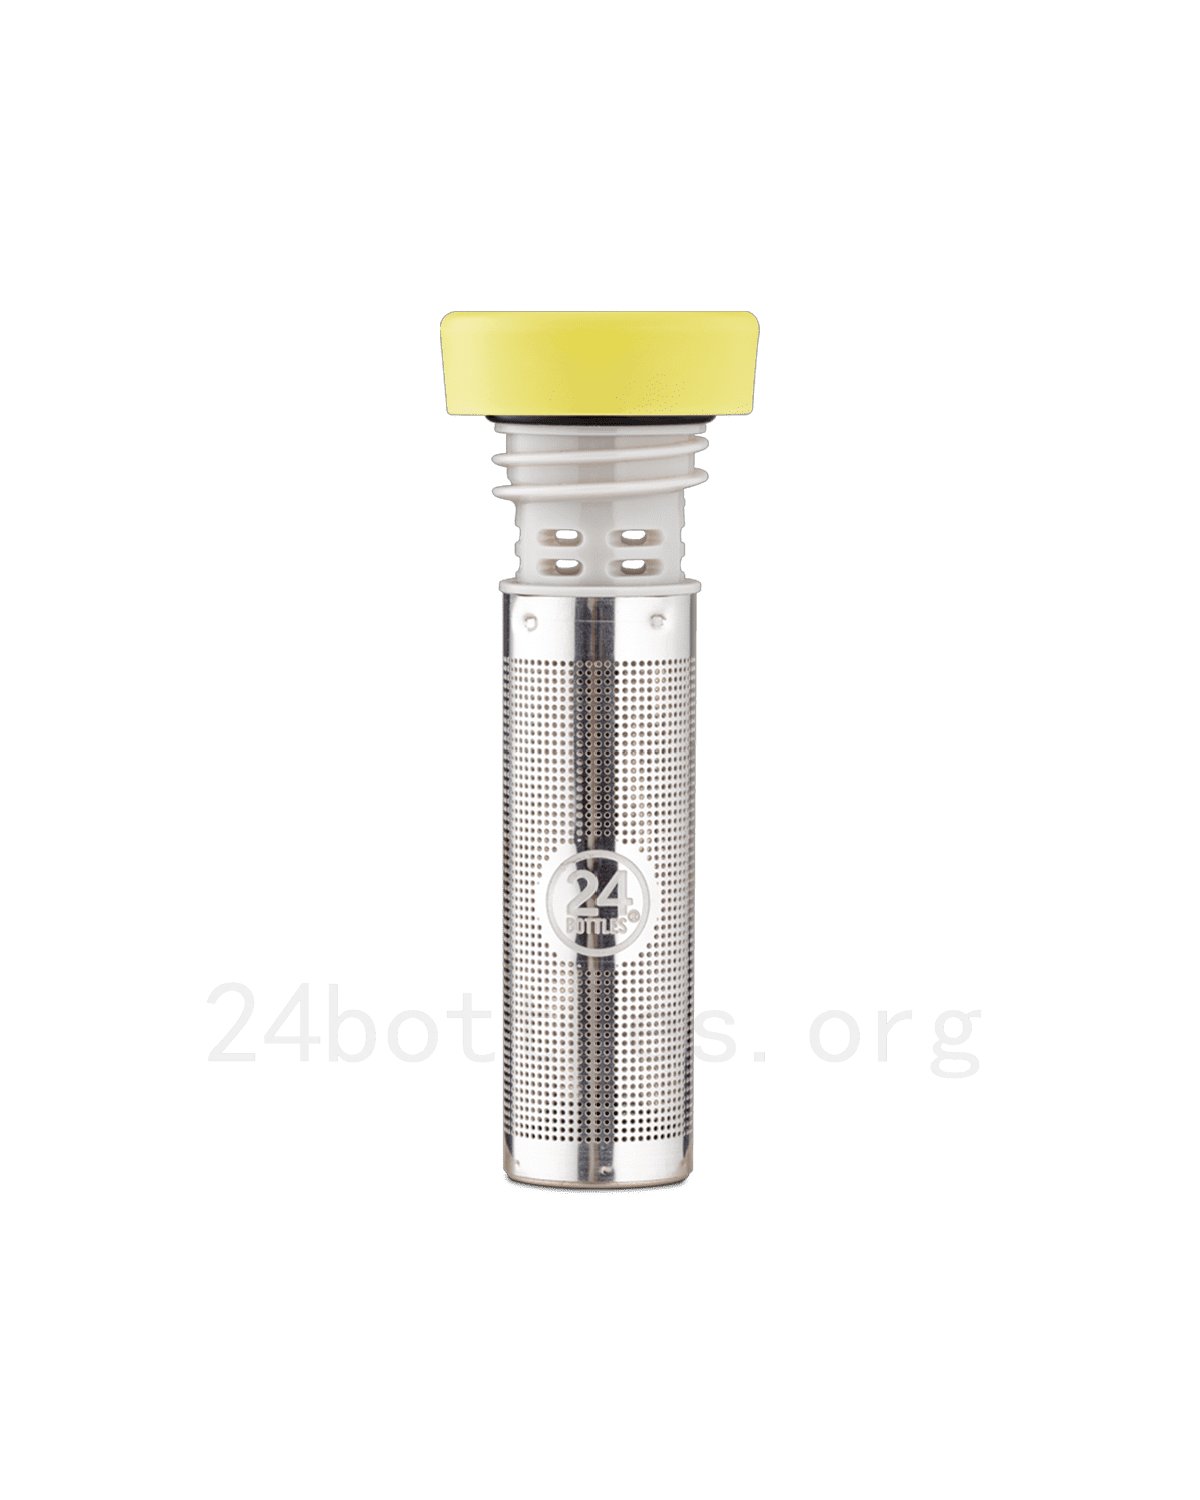 Bottle Infuser Lid - Light Yellow bottiglia acciaio